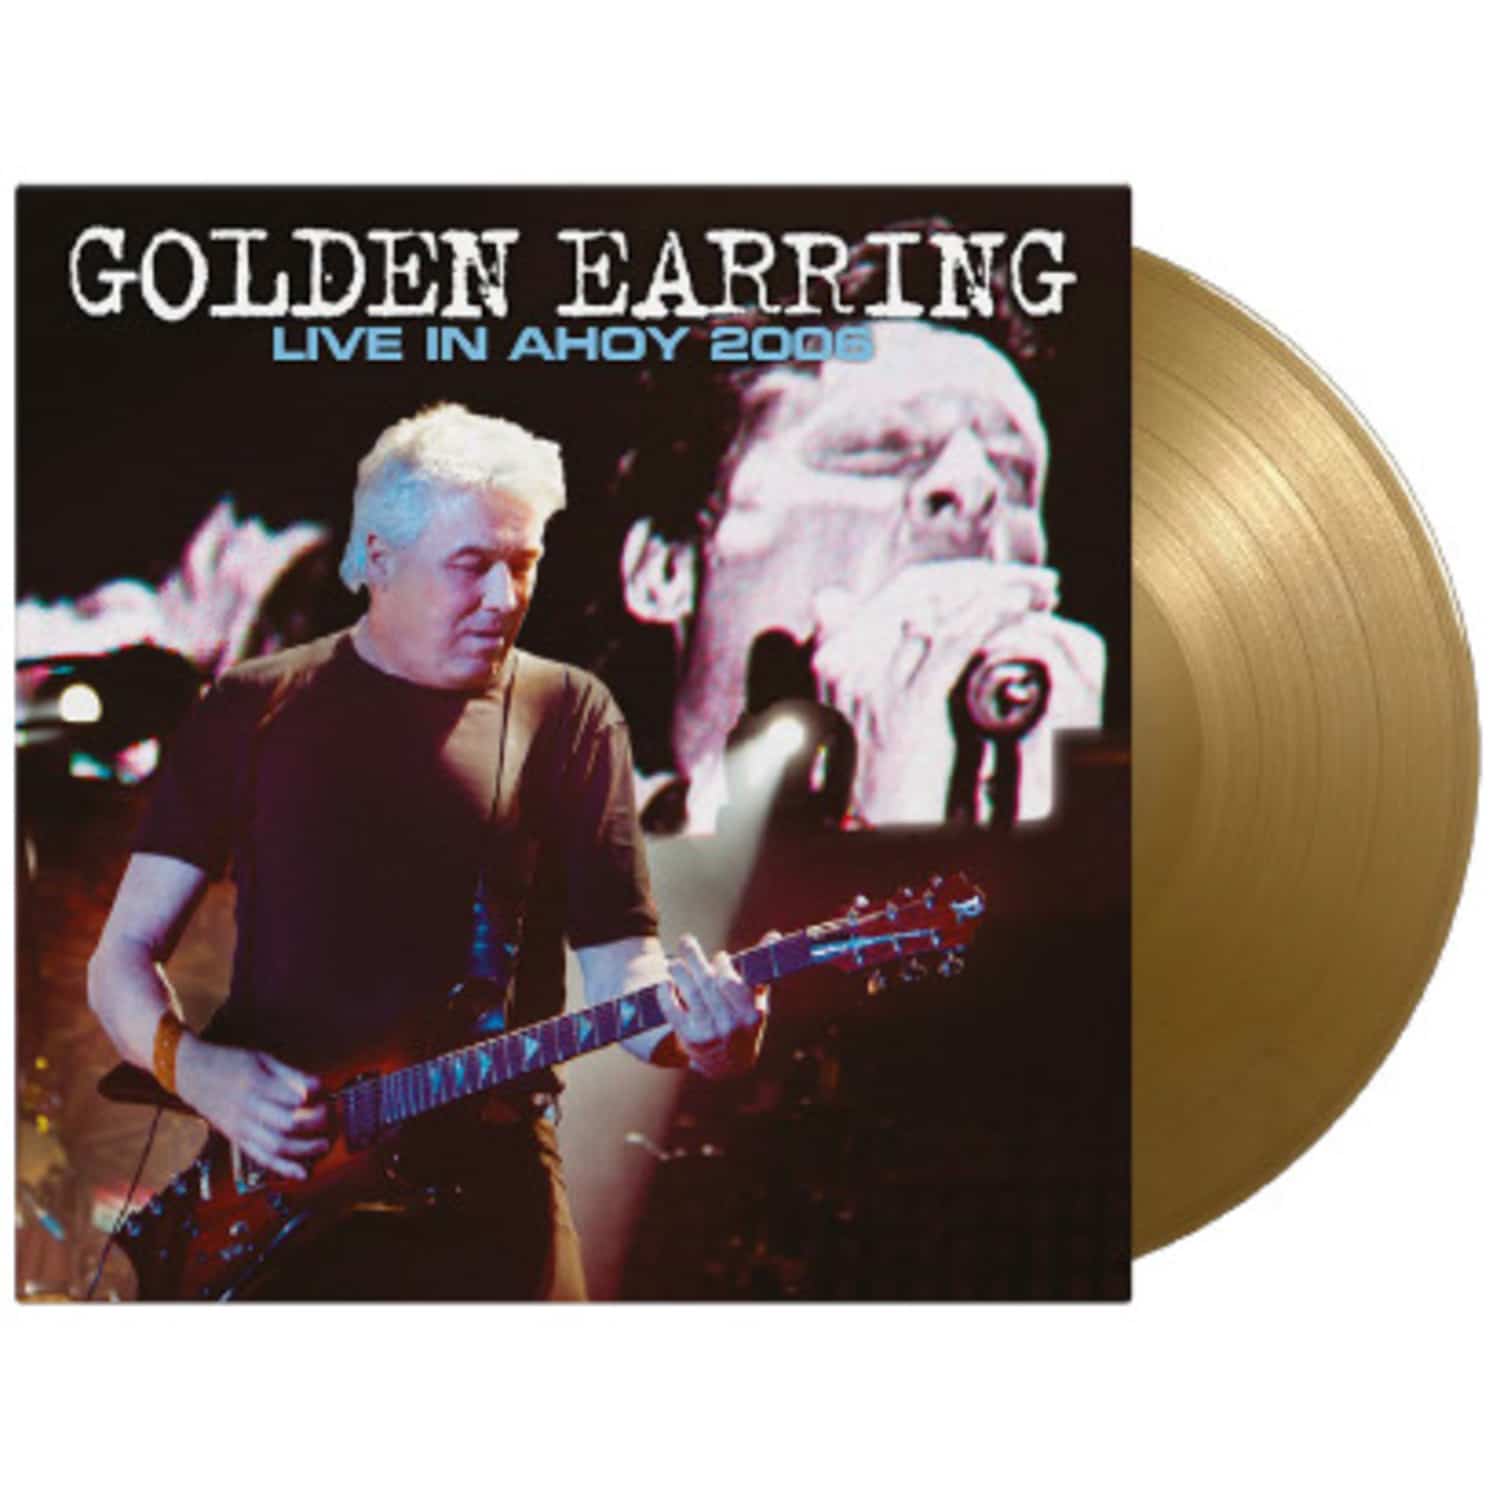 Golden Earring - LIVE IN AHOY 2006 